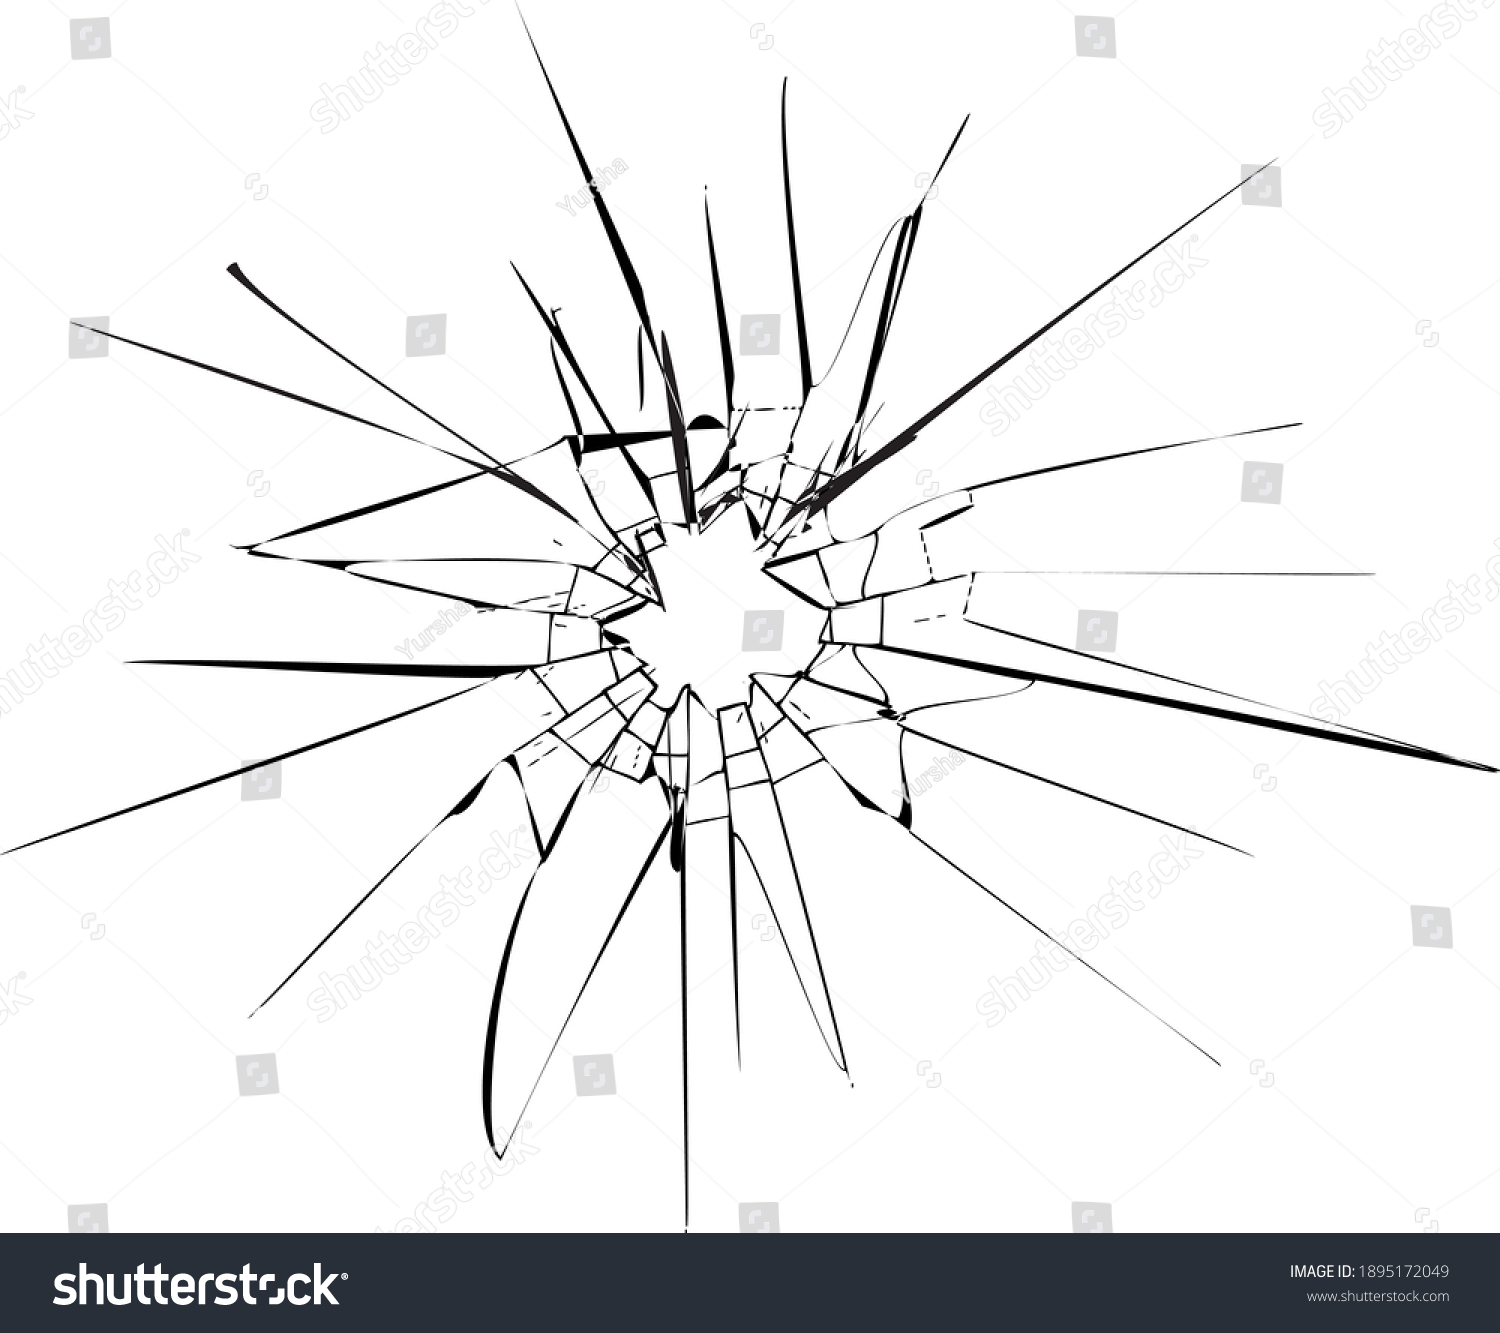 SVG of Broken glass, cracks, bullet marks on glass. High resolution. Texture glass with black hole. EPS 10 svg